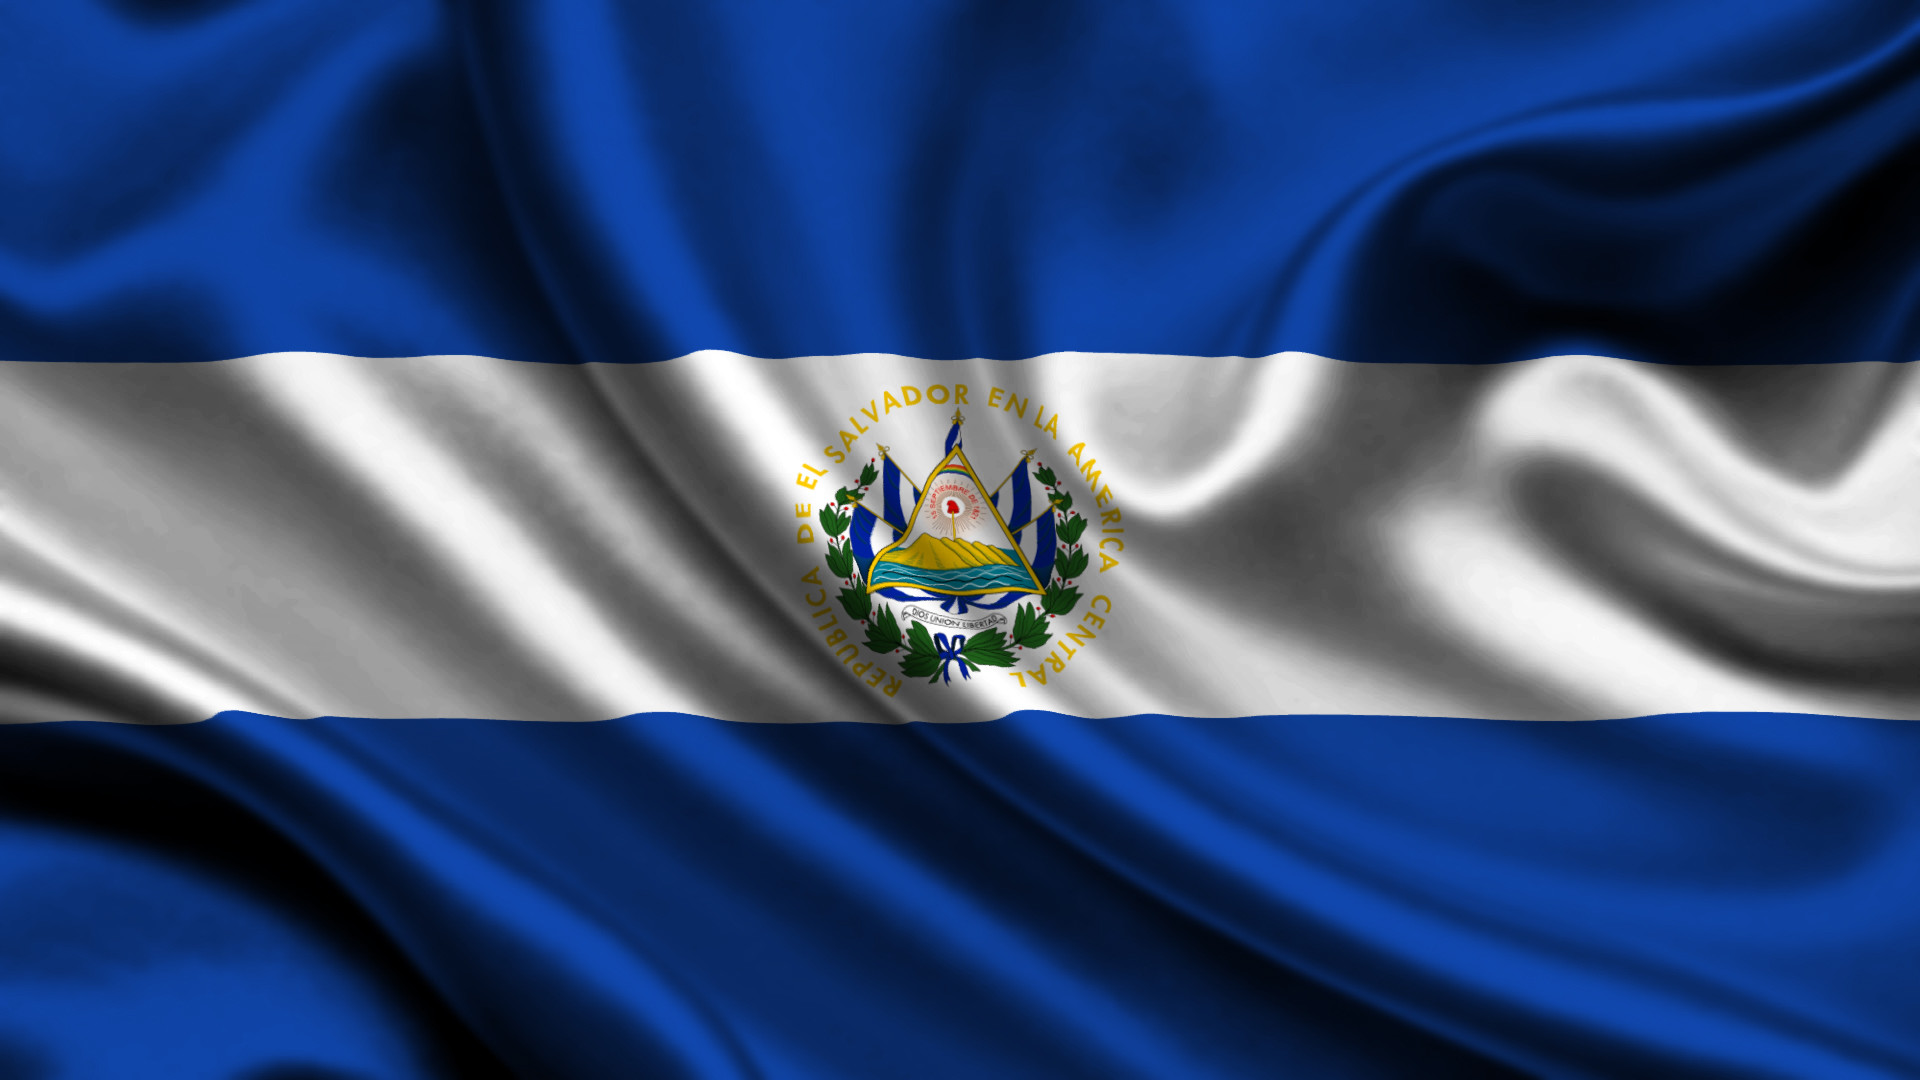 1920x1080 El Salvador Flag Wallpapers in Best  px Resolutions